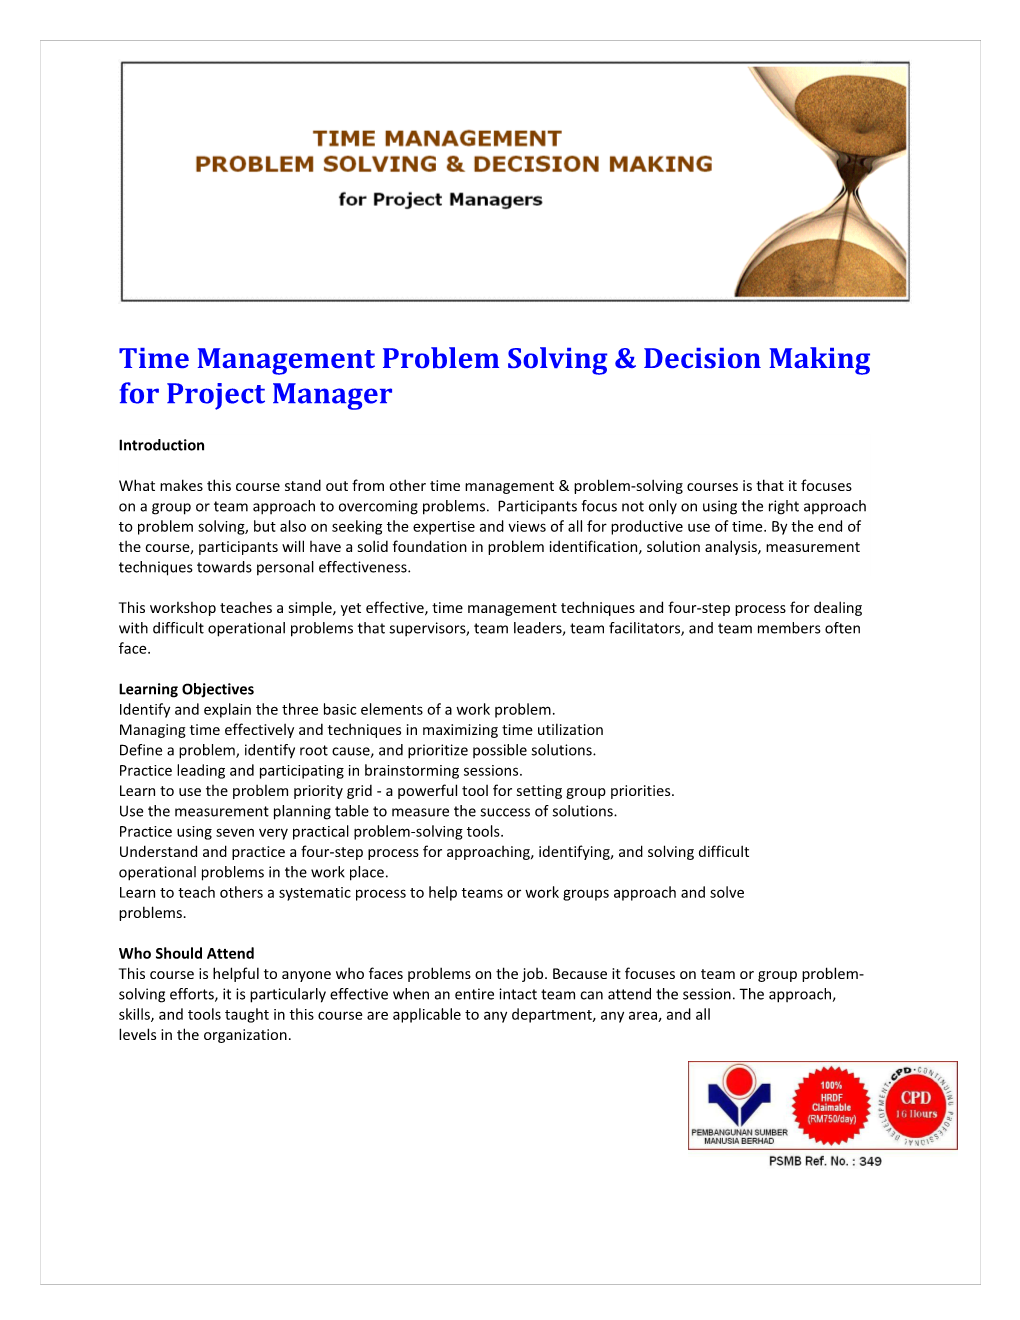 Time Management Problem Solving & Decision Making